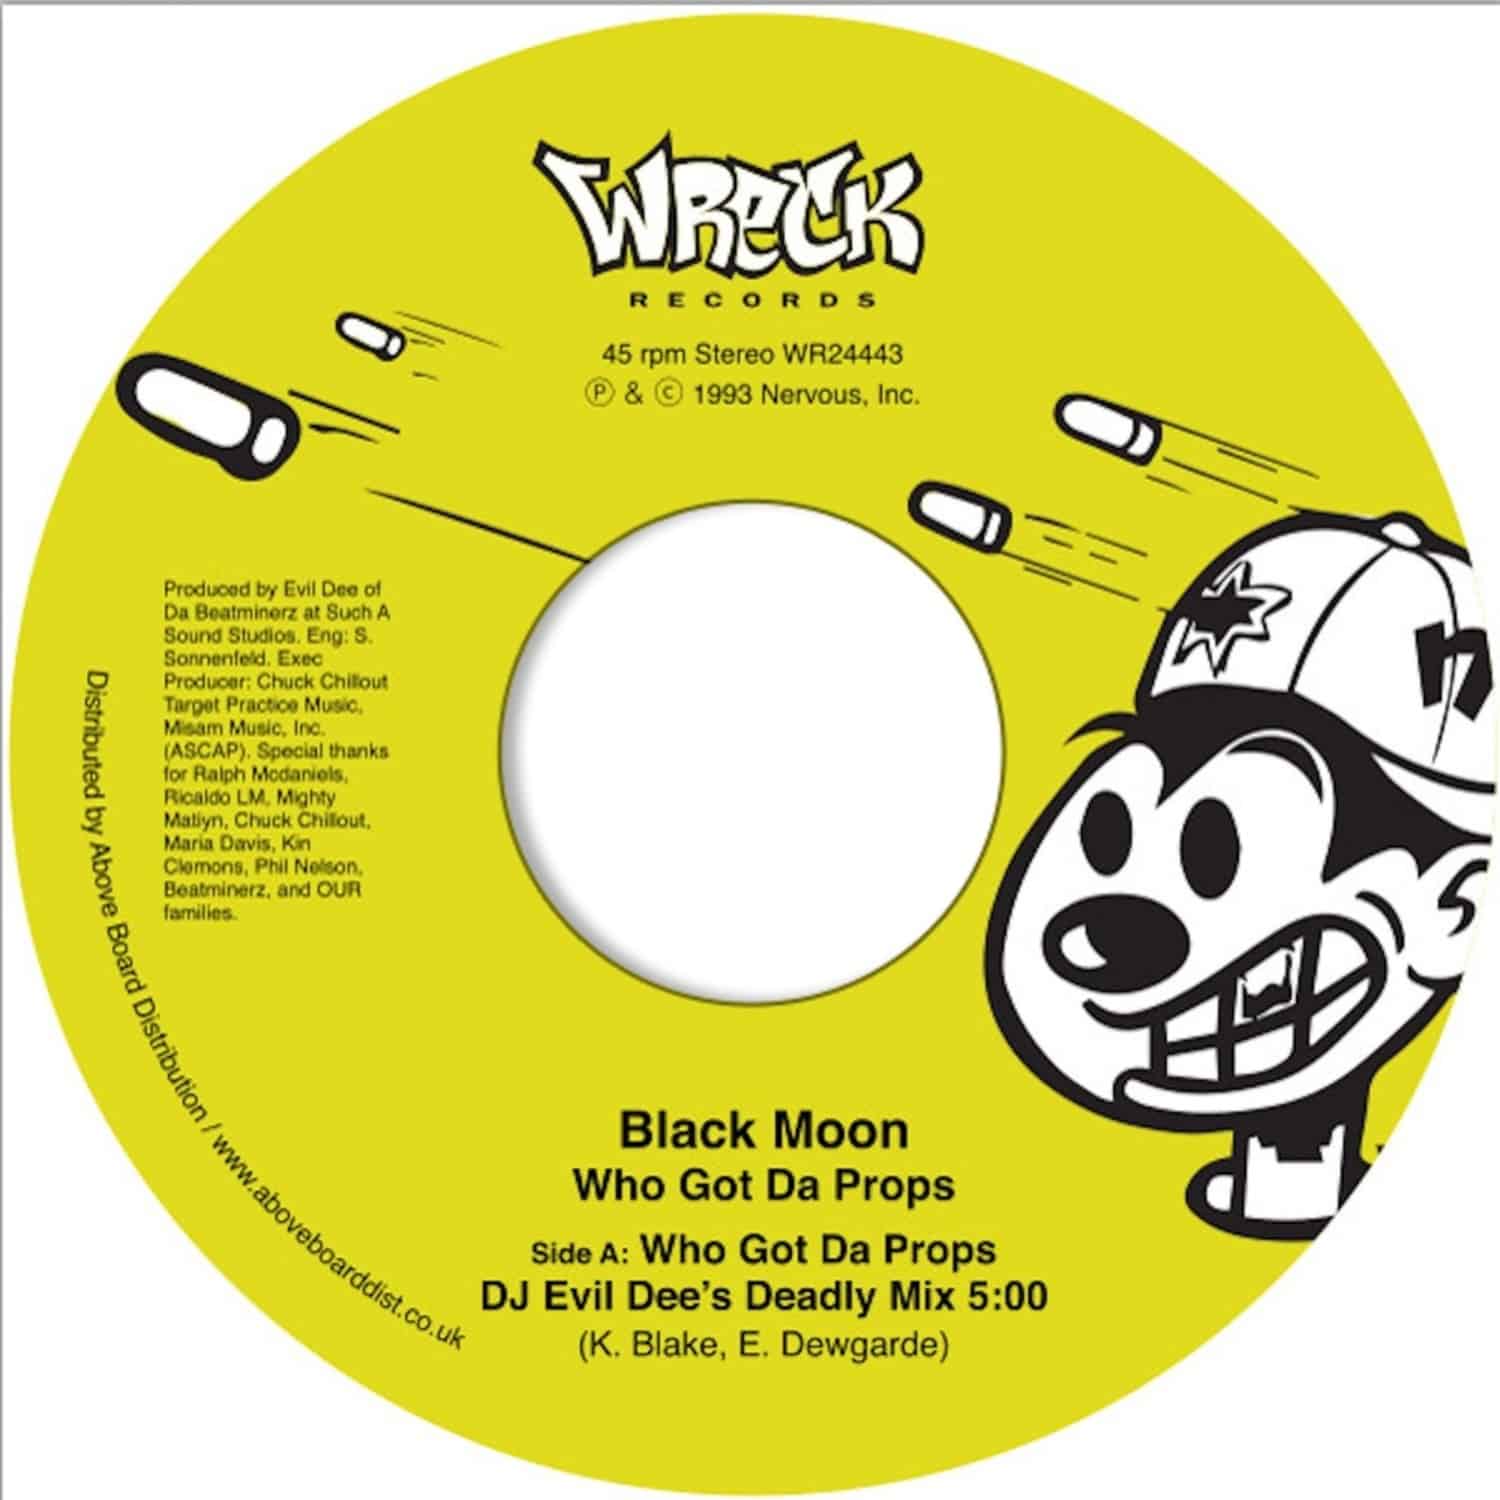 Black Moon - WHO GOT DA PROPS? 